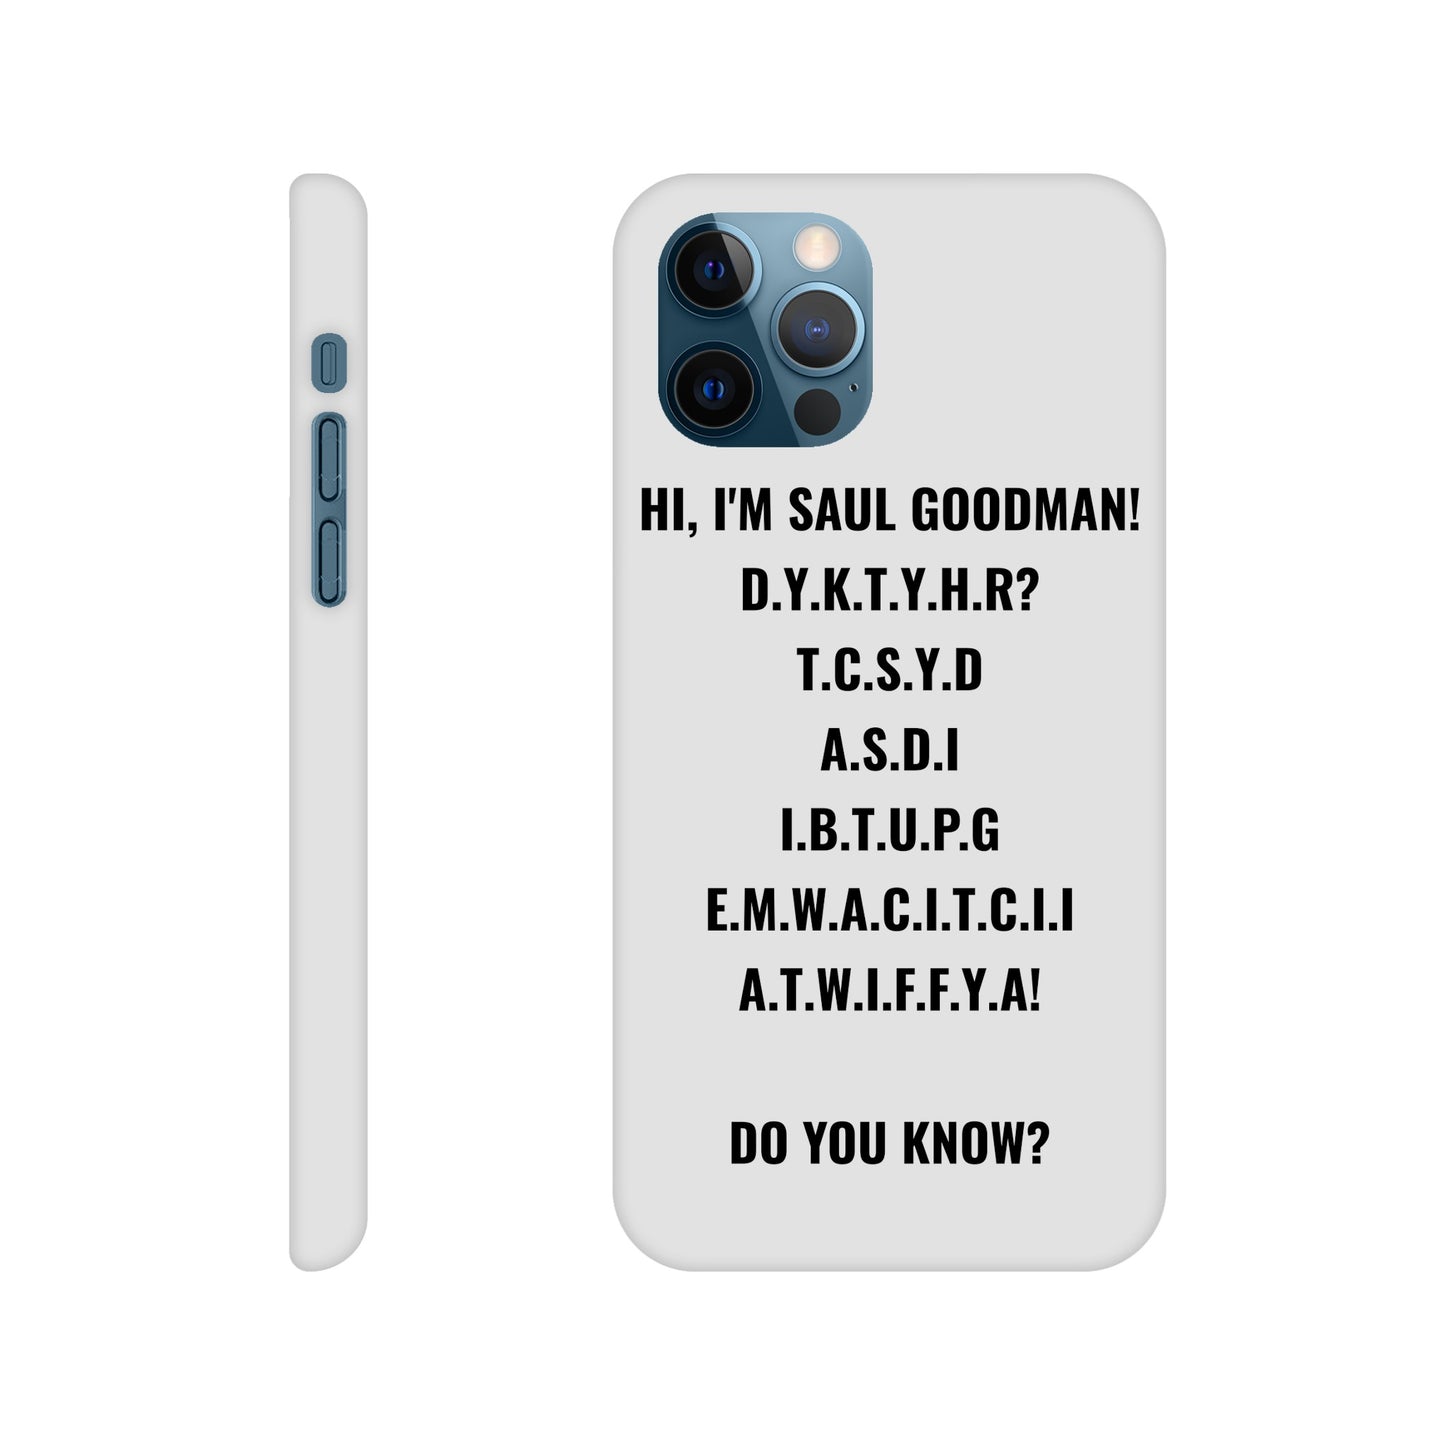 Better Call Saul | "Hi! I'm Saul Goodman!"